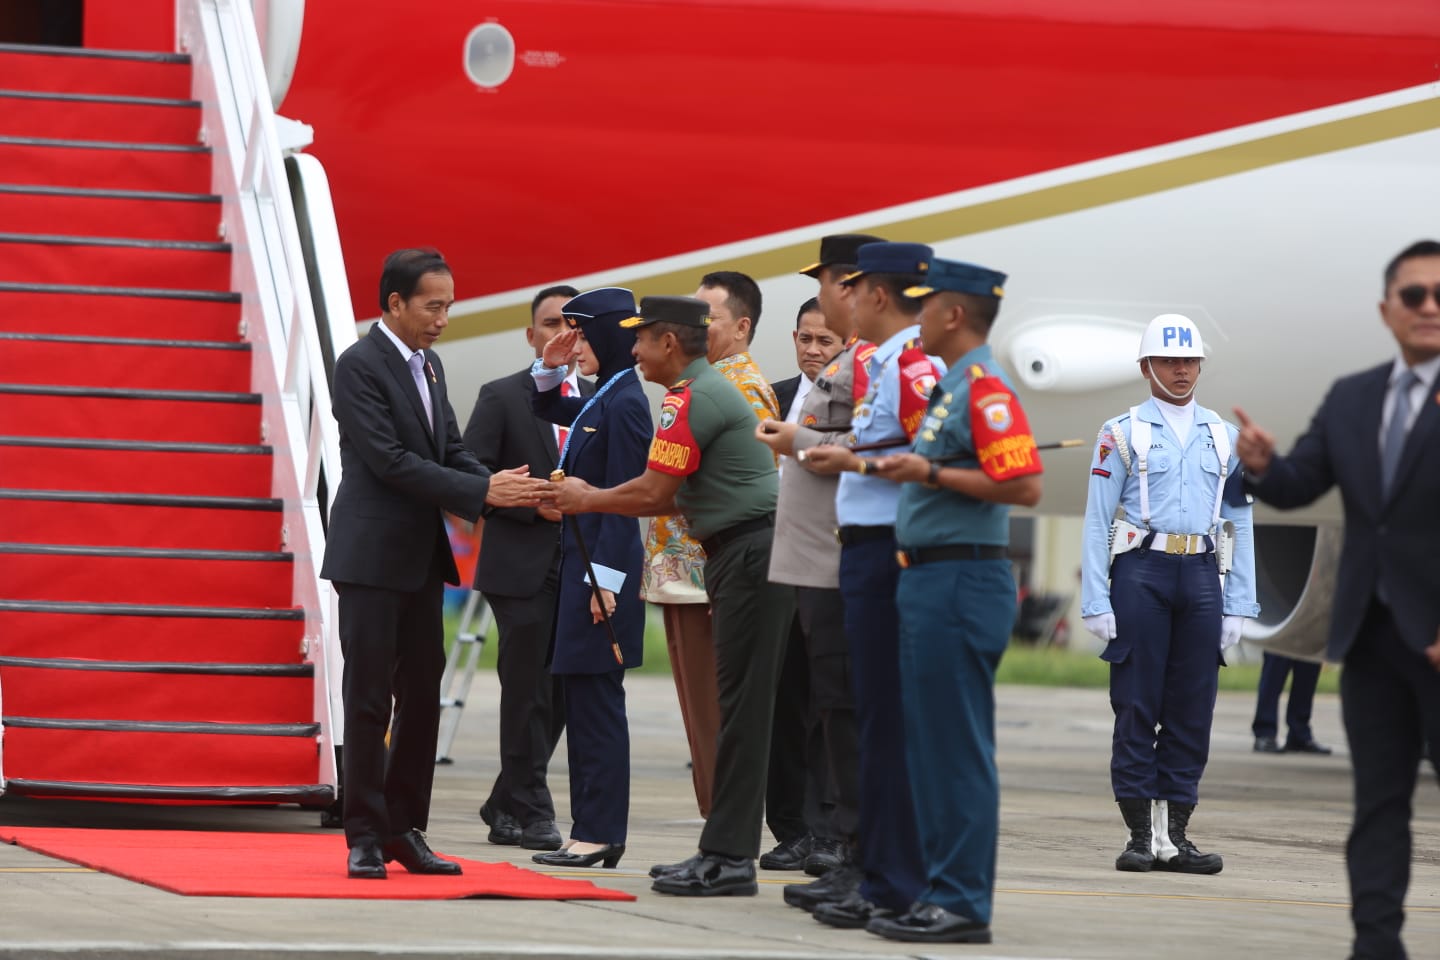 Presiden Jokowi singgah di Aceh sebelum terbang ke Dubai 